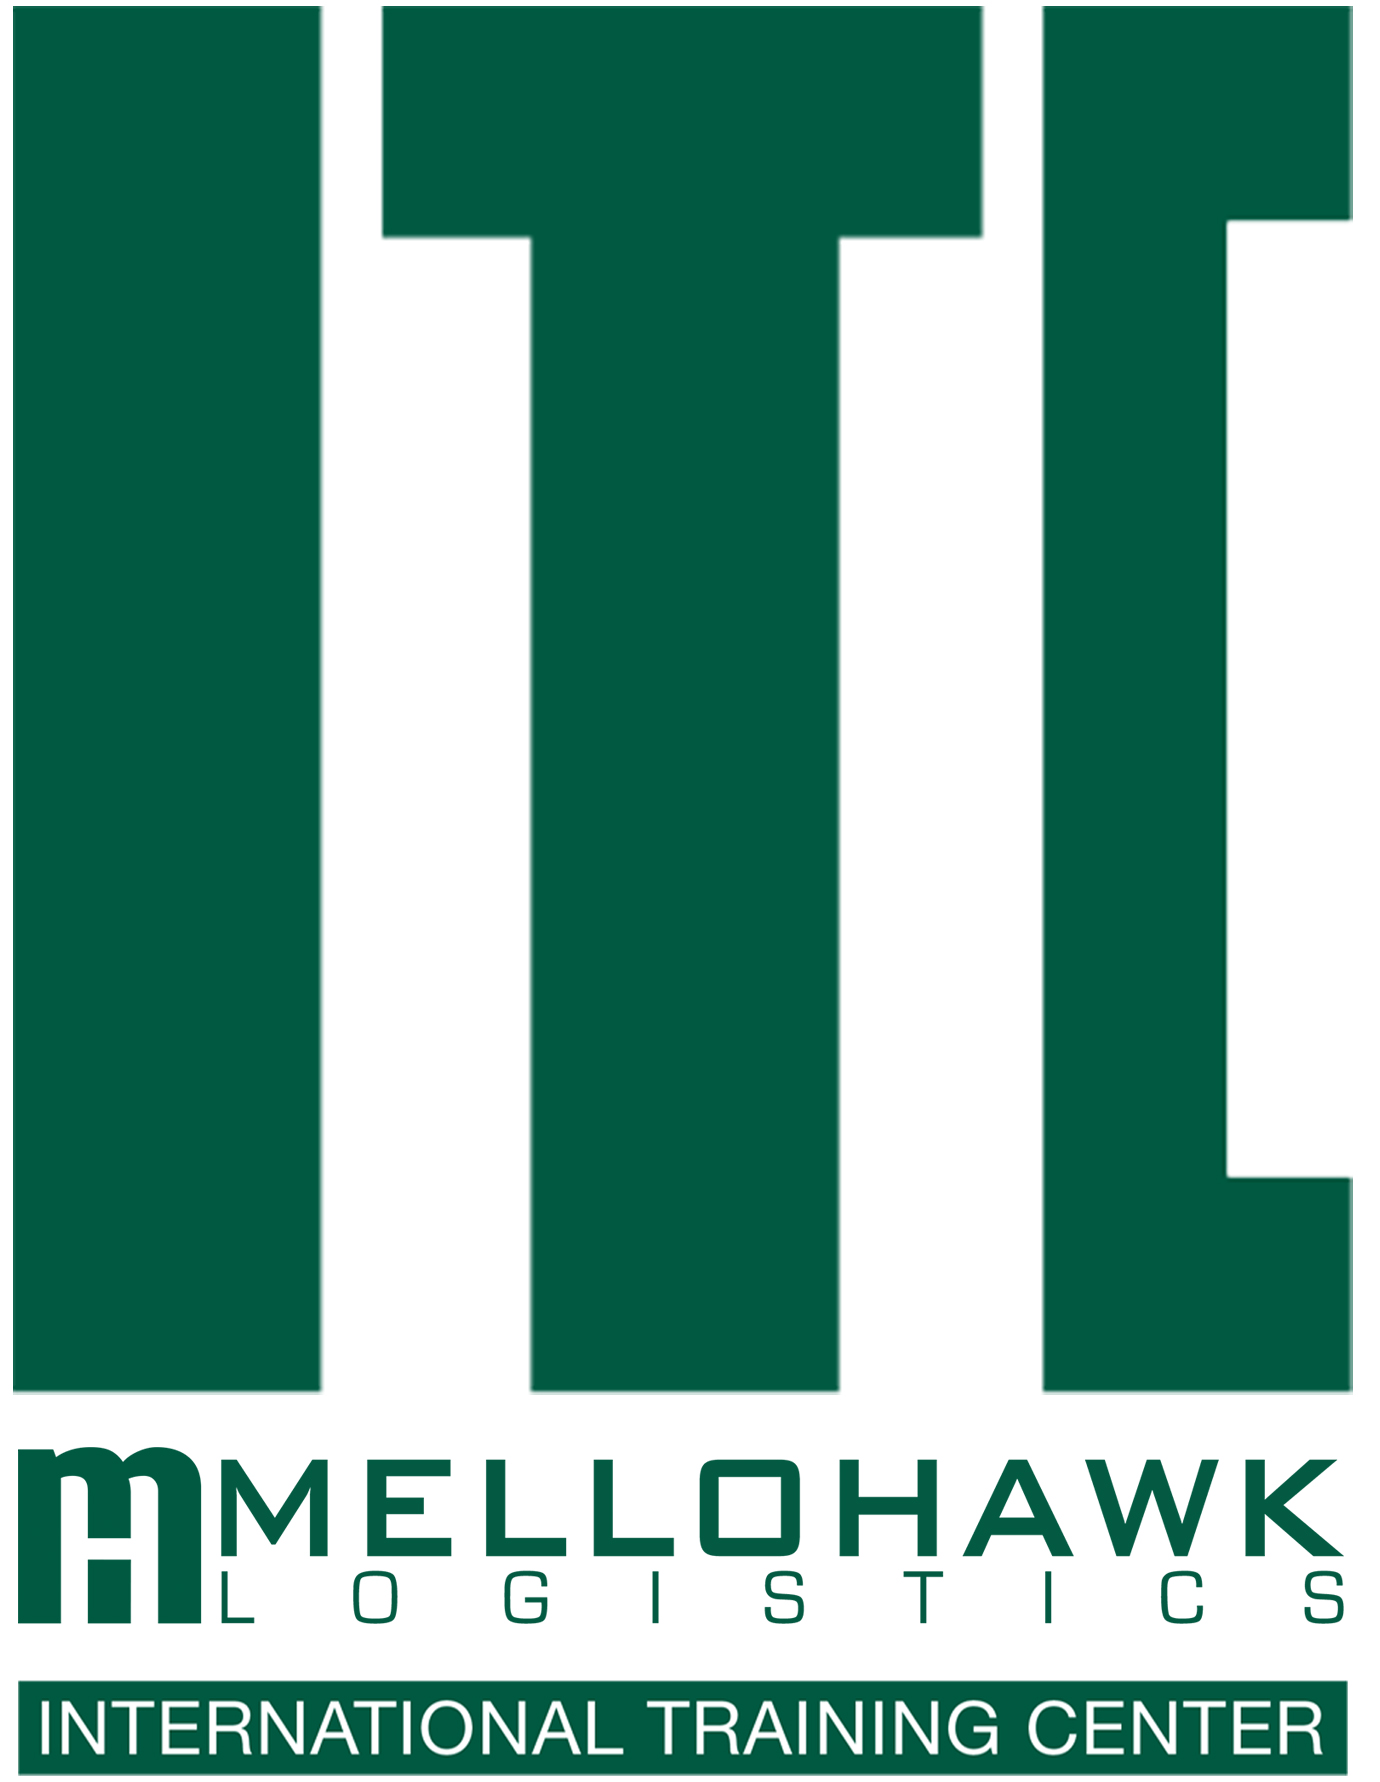 MELLOHAWK Logistics International Training Center